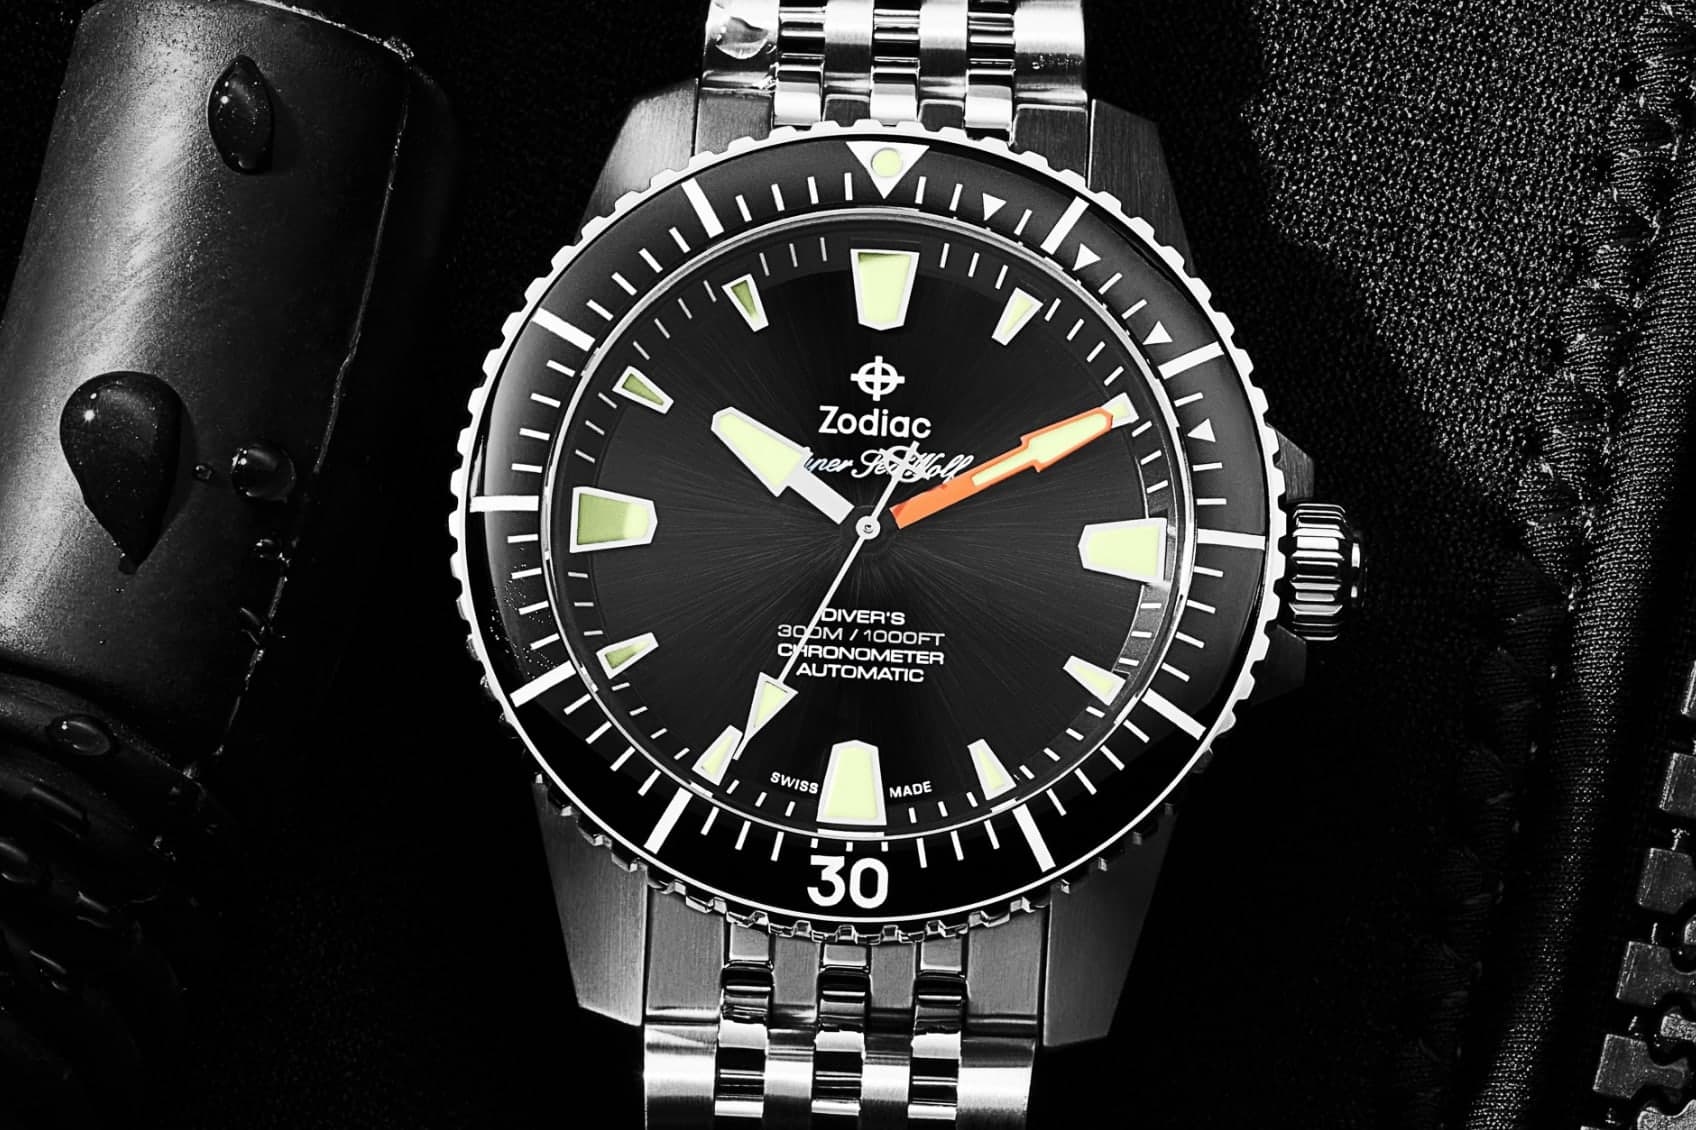 Zodiac Super Sea Wolf Pro-Diver watch.